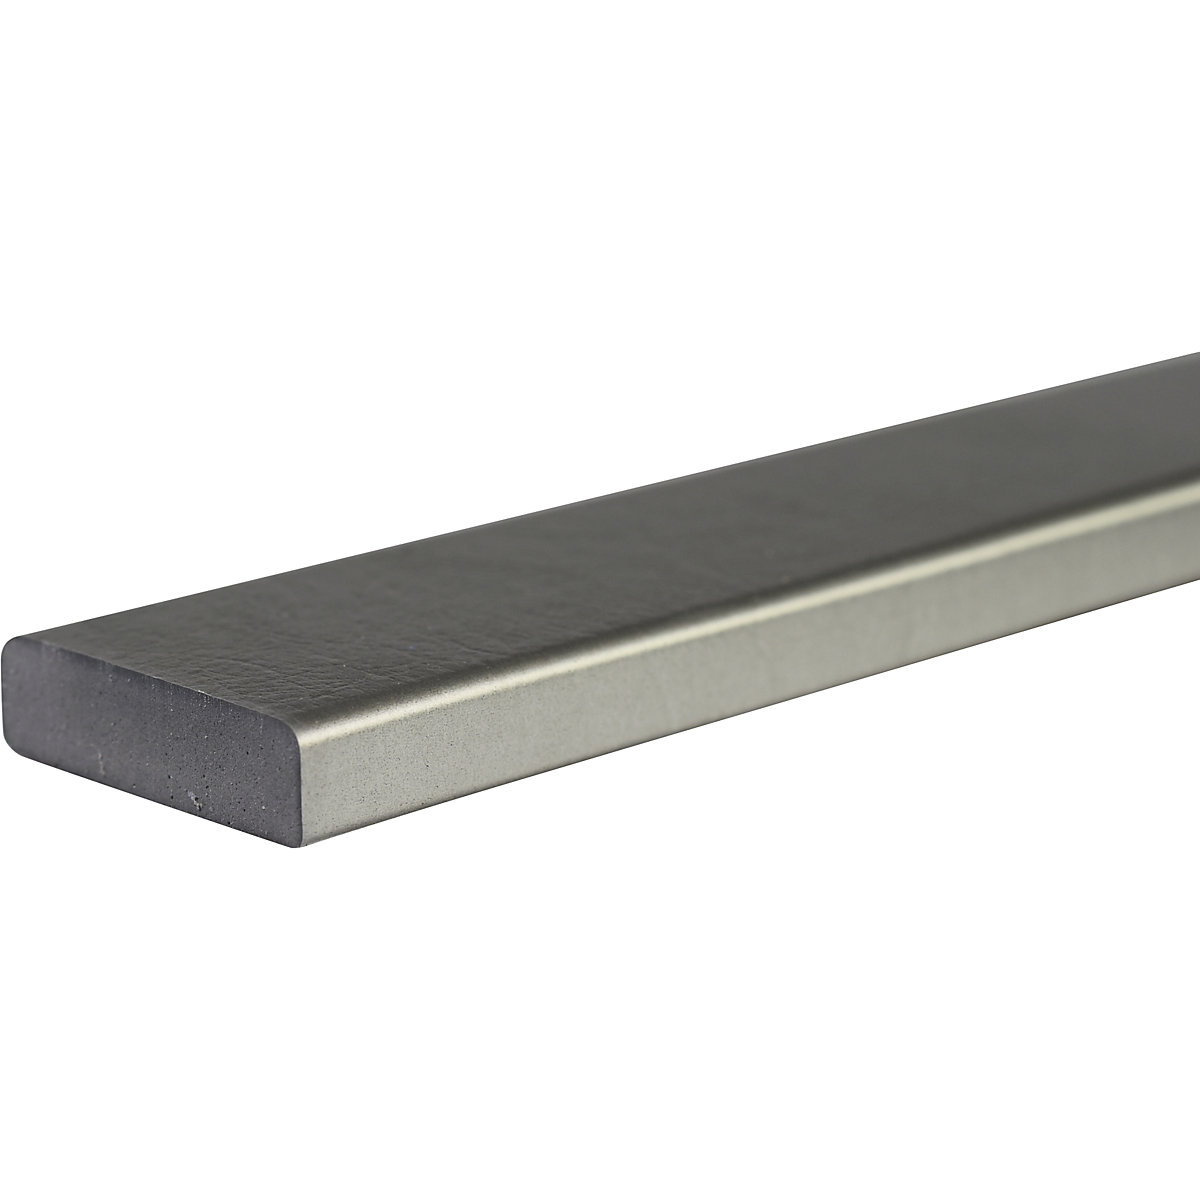 Knuffi®-oppervlaktebescherming – SHG, type S, stuk van 1 m, zilverkleurig-22